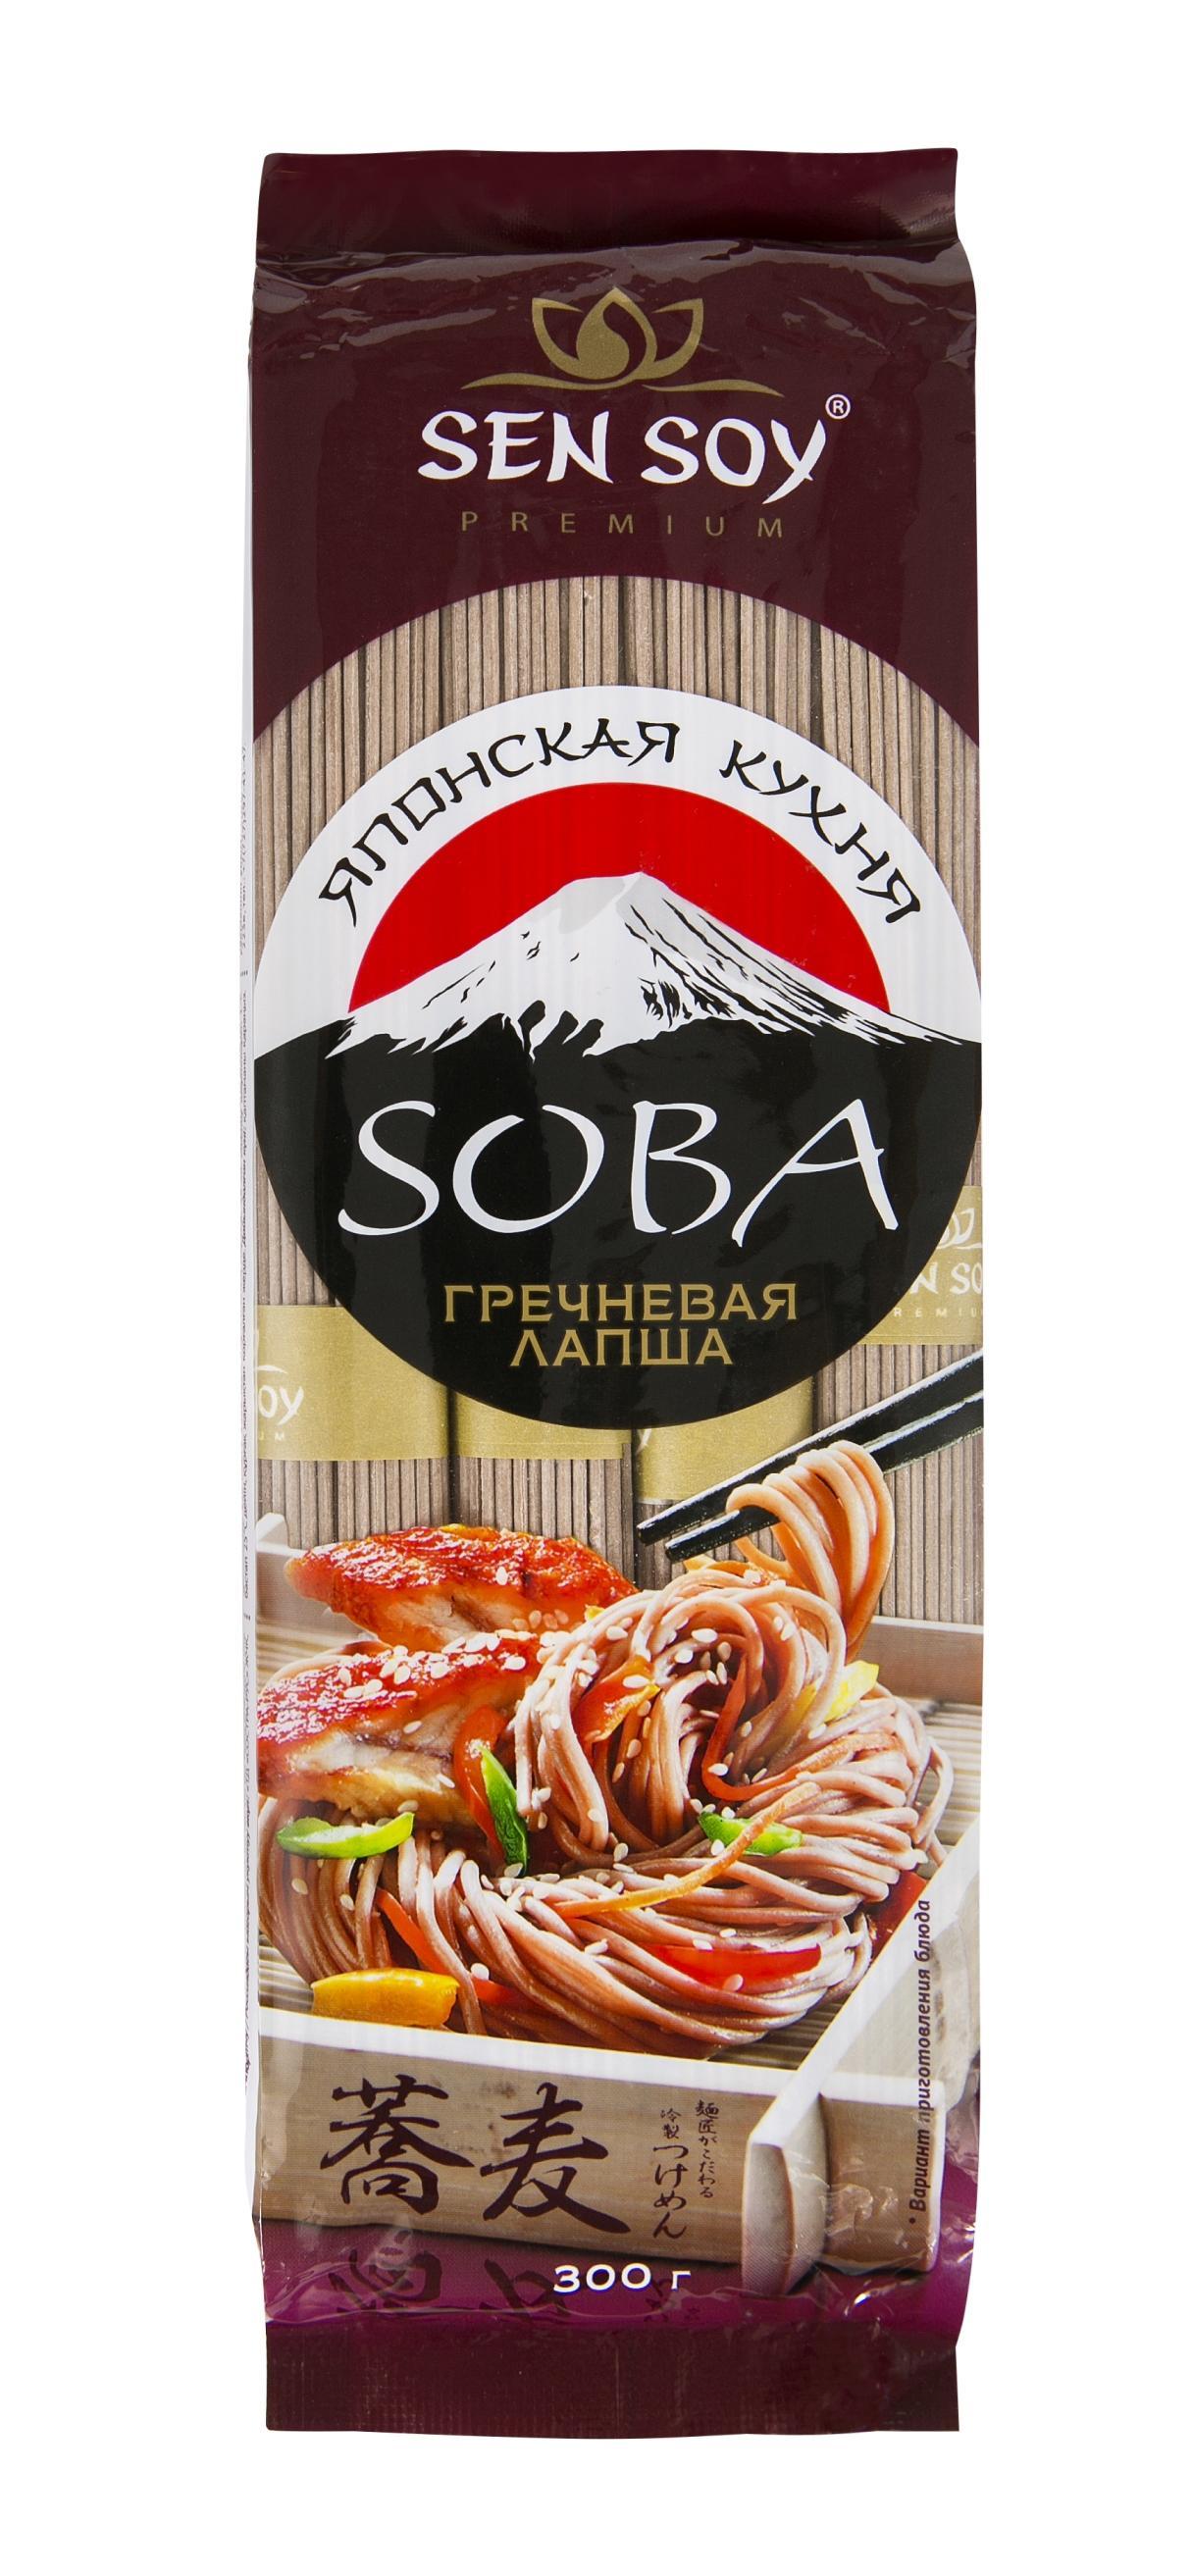 Лапша Sen Soy Premium Soba гречневая 300 гр., флоу-пак